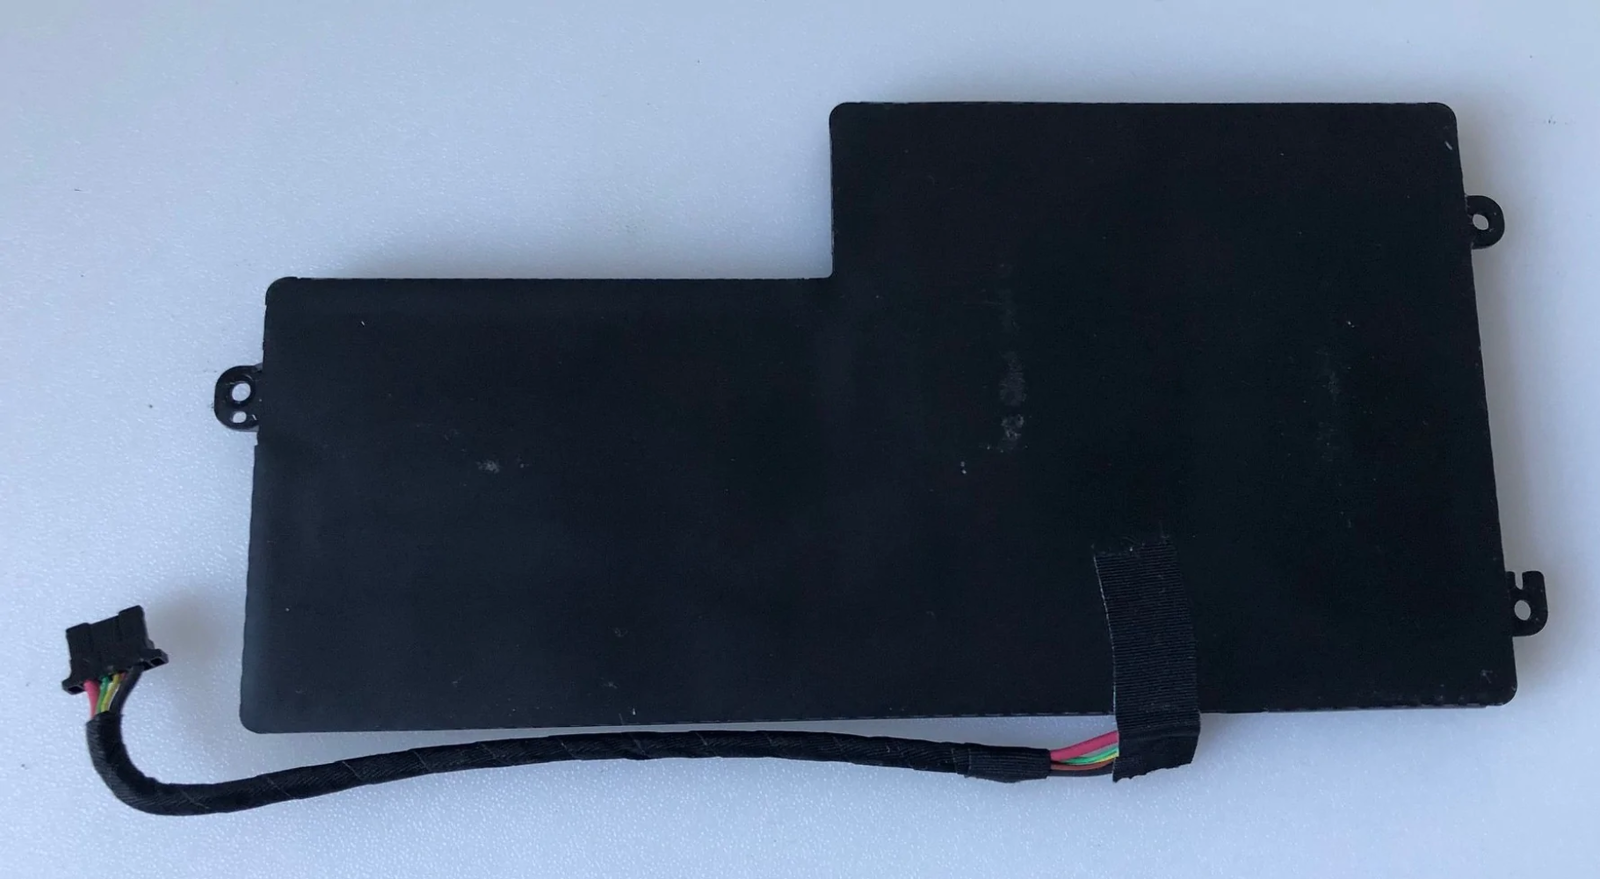 Original Lenovo ThinkPad 45N1109 battery